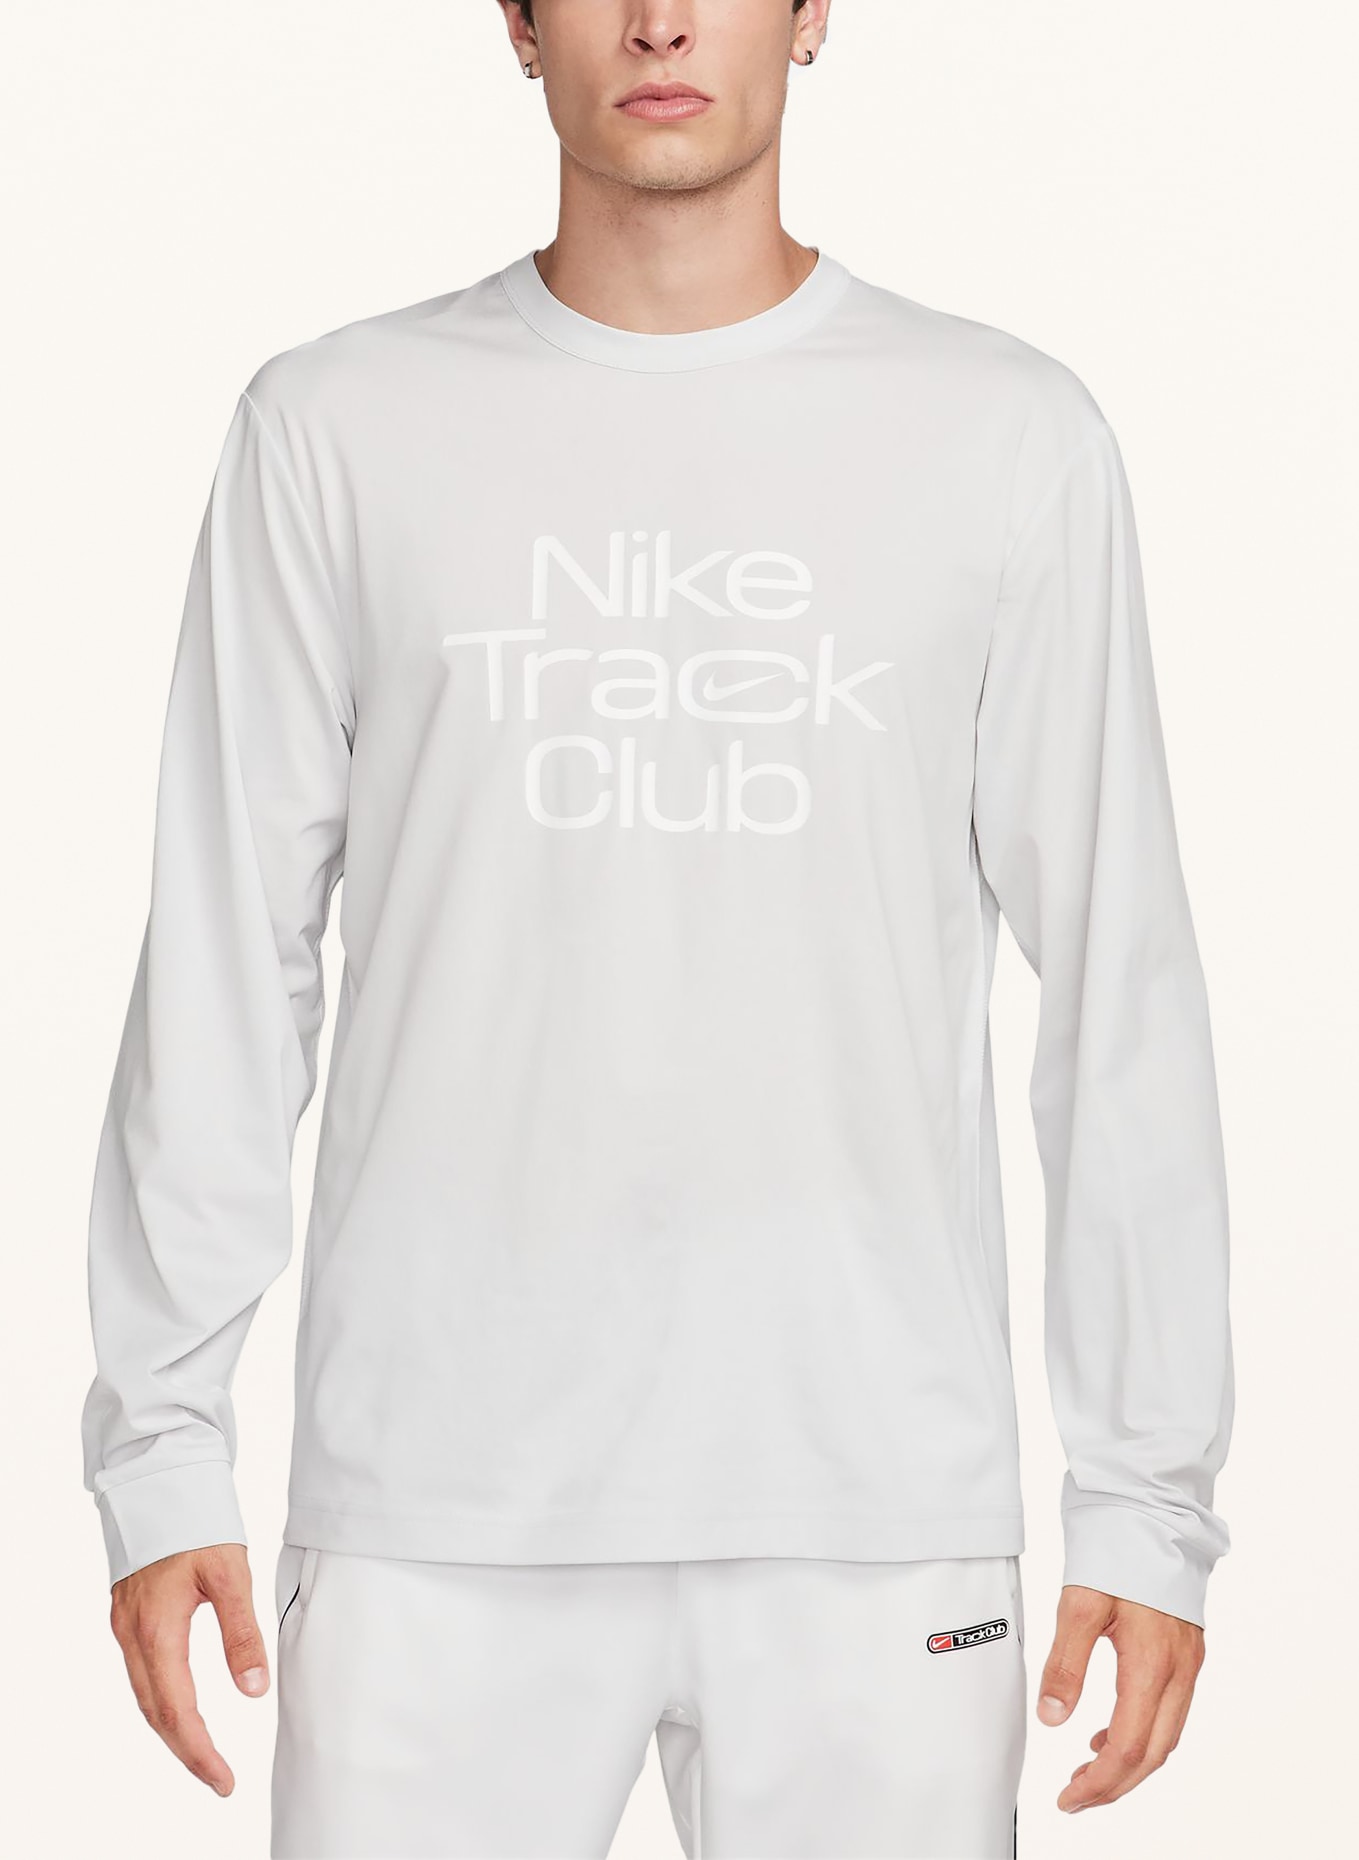 Nike Laufshirt TRACK CLUB hellgrau/ weiss in